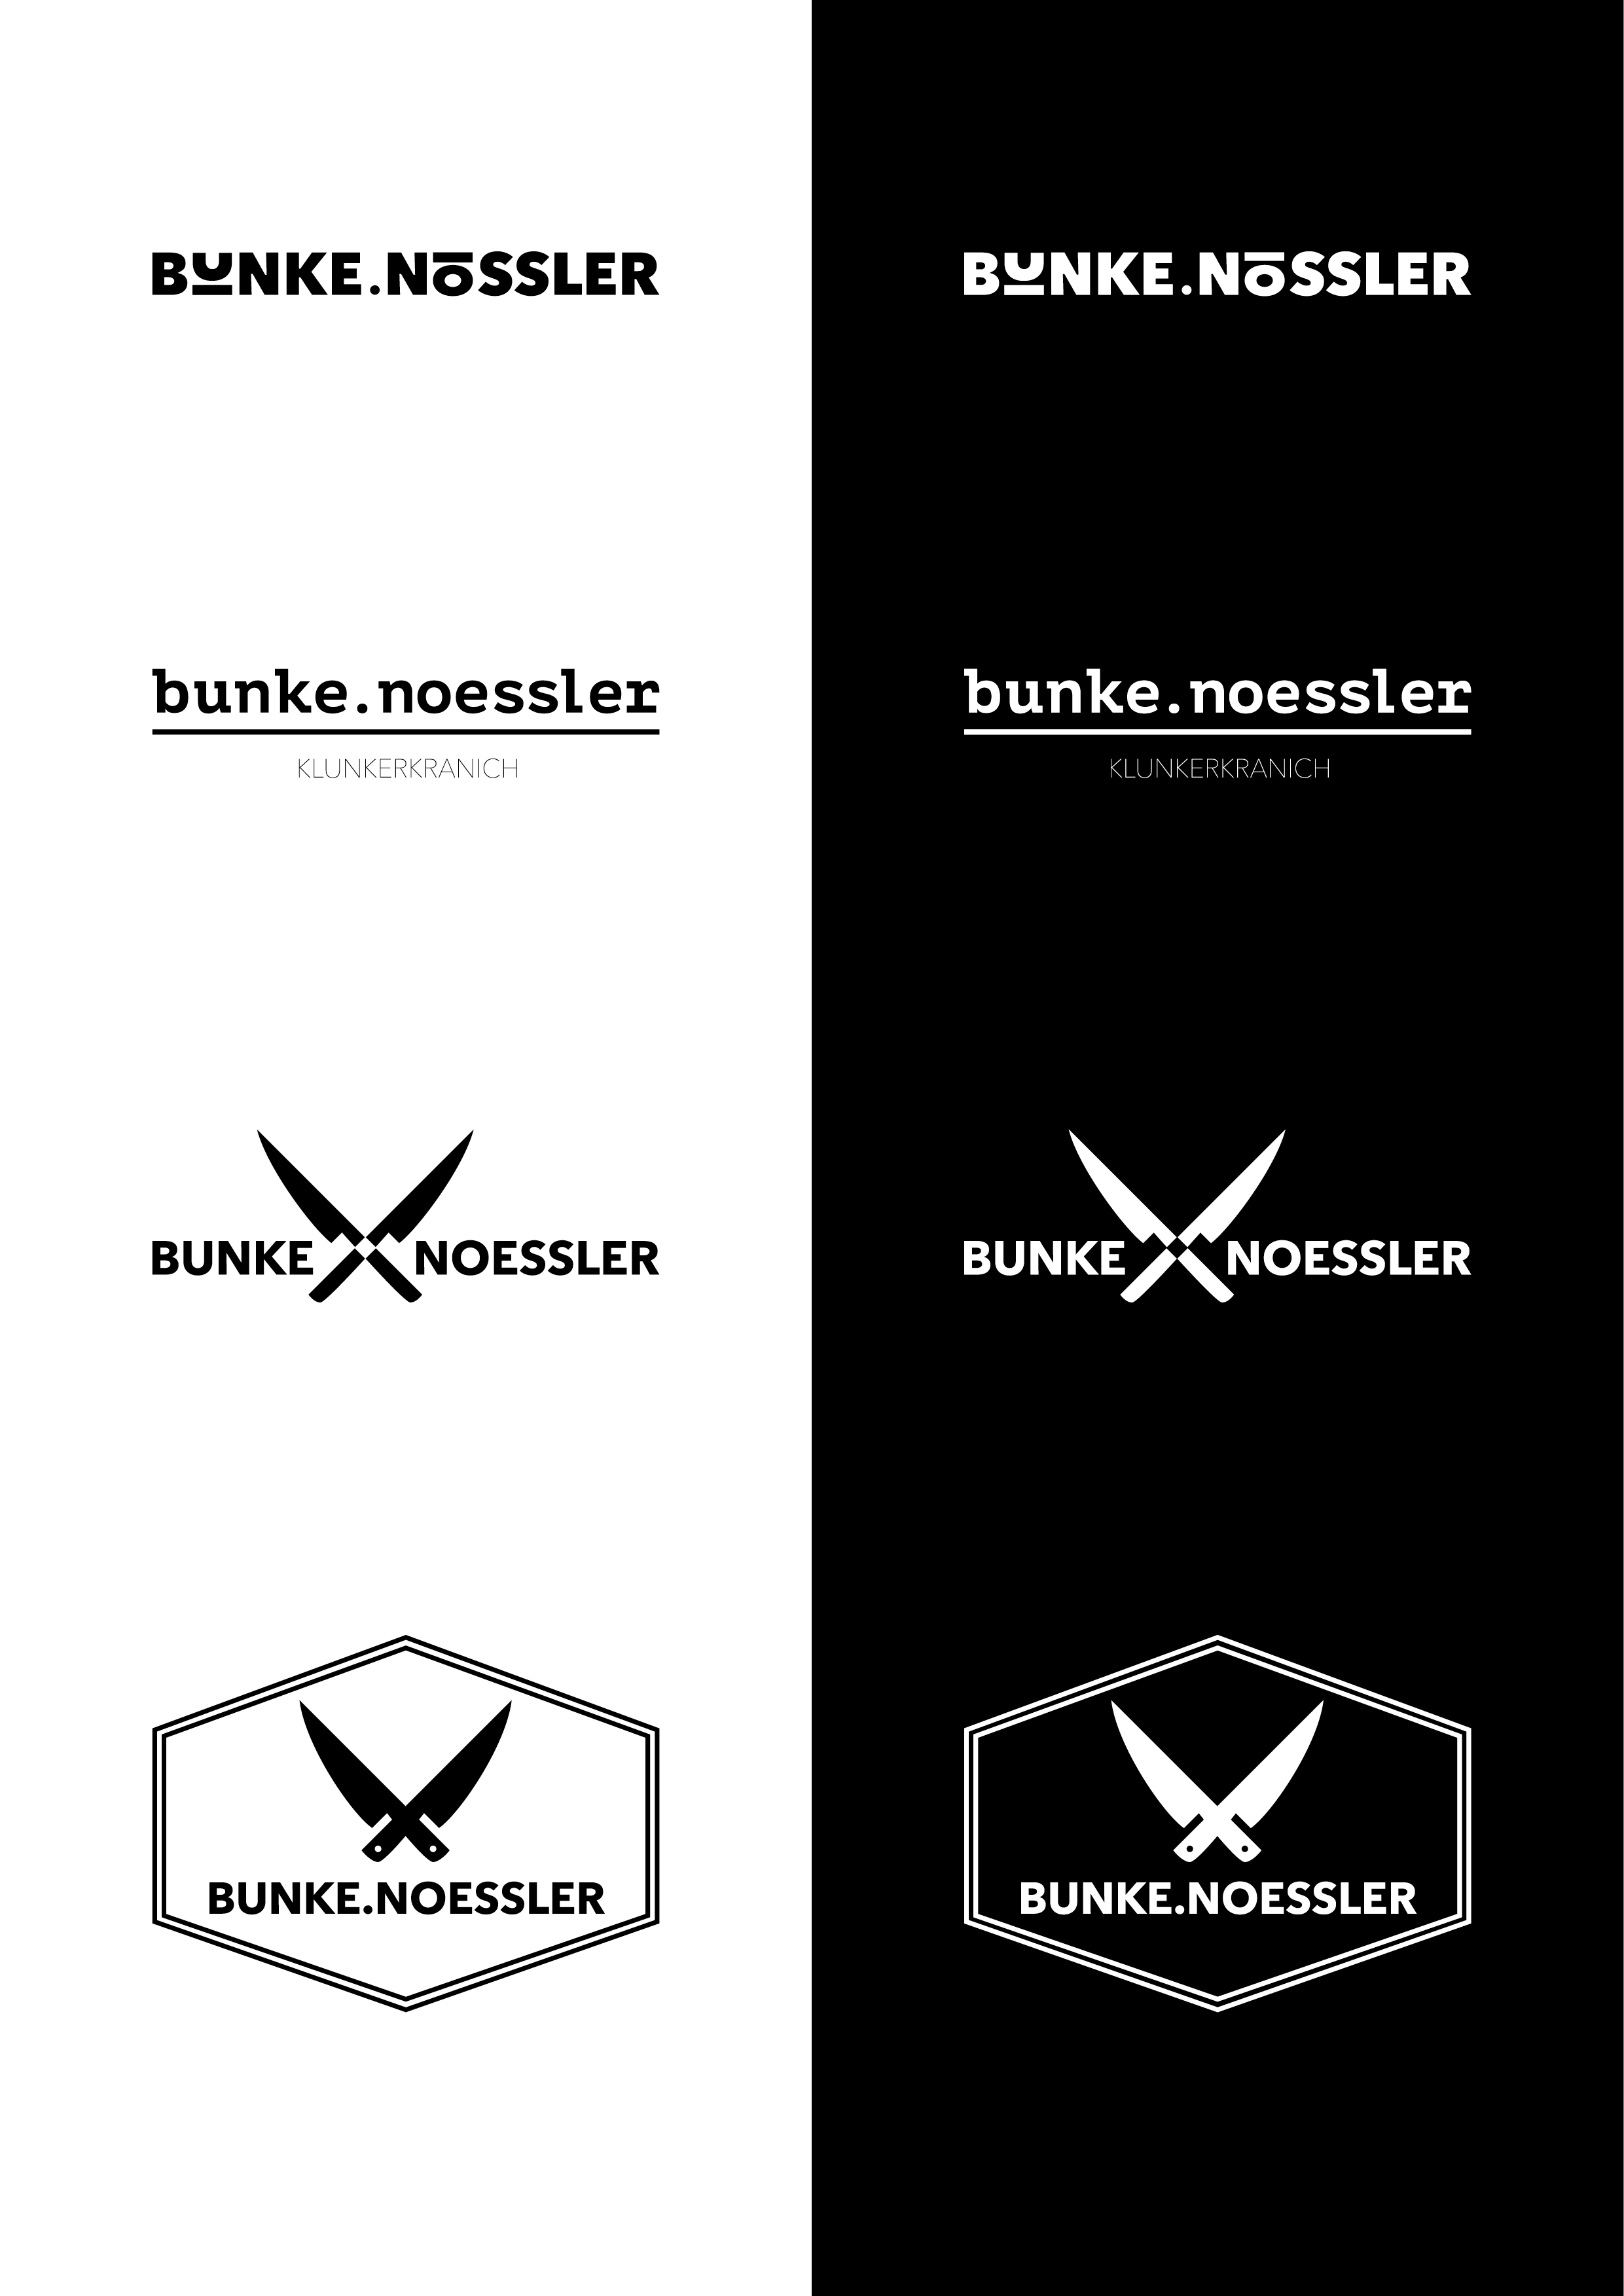 zwei1000_grafik_logo_bunke_noessler_gross